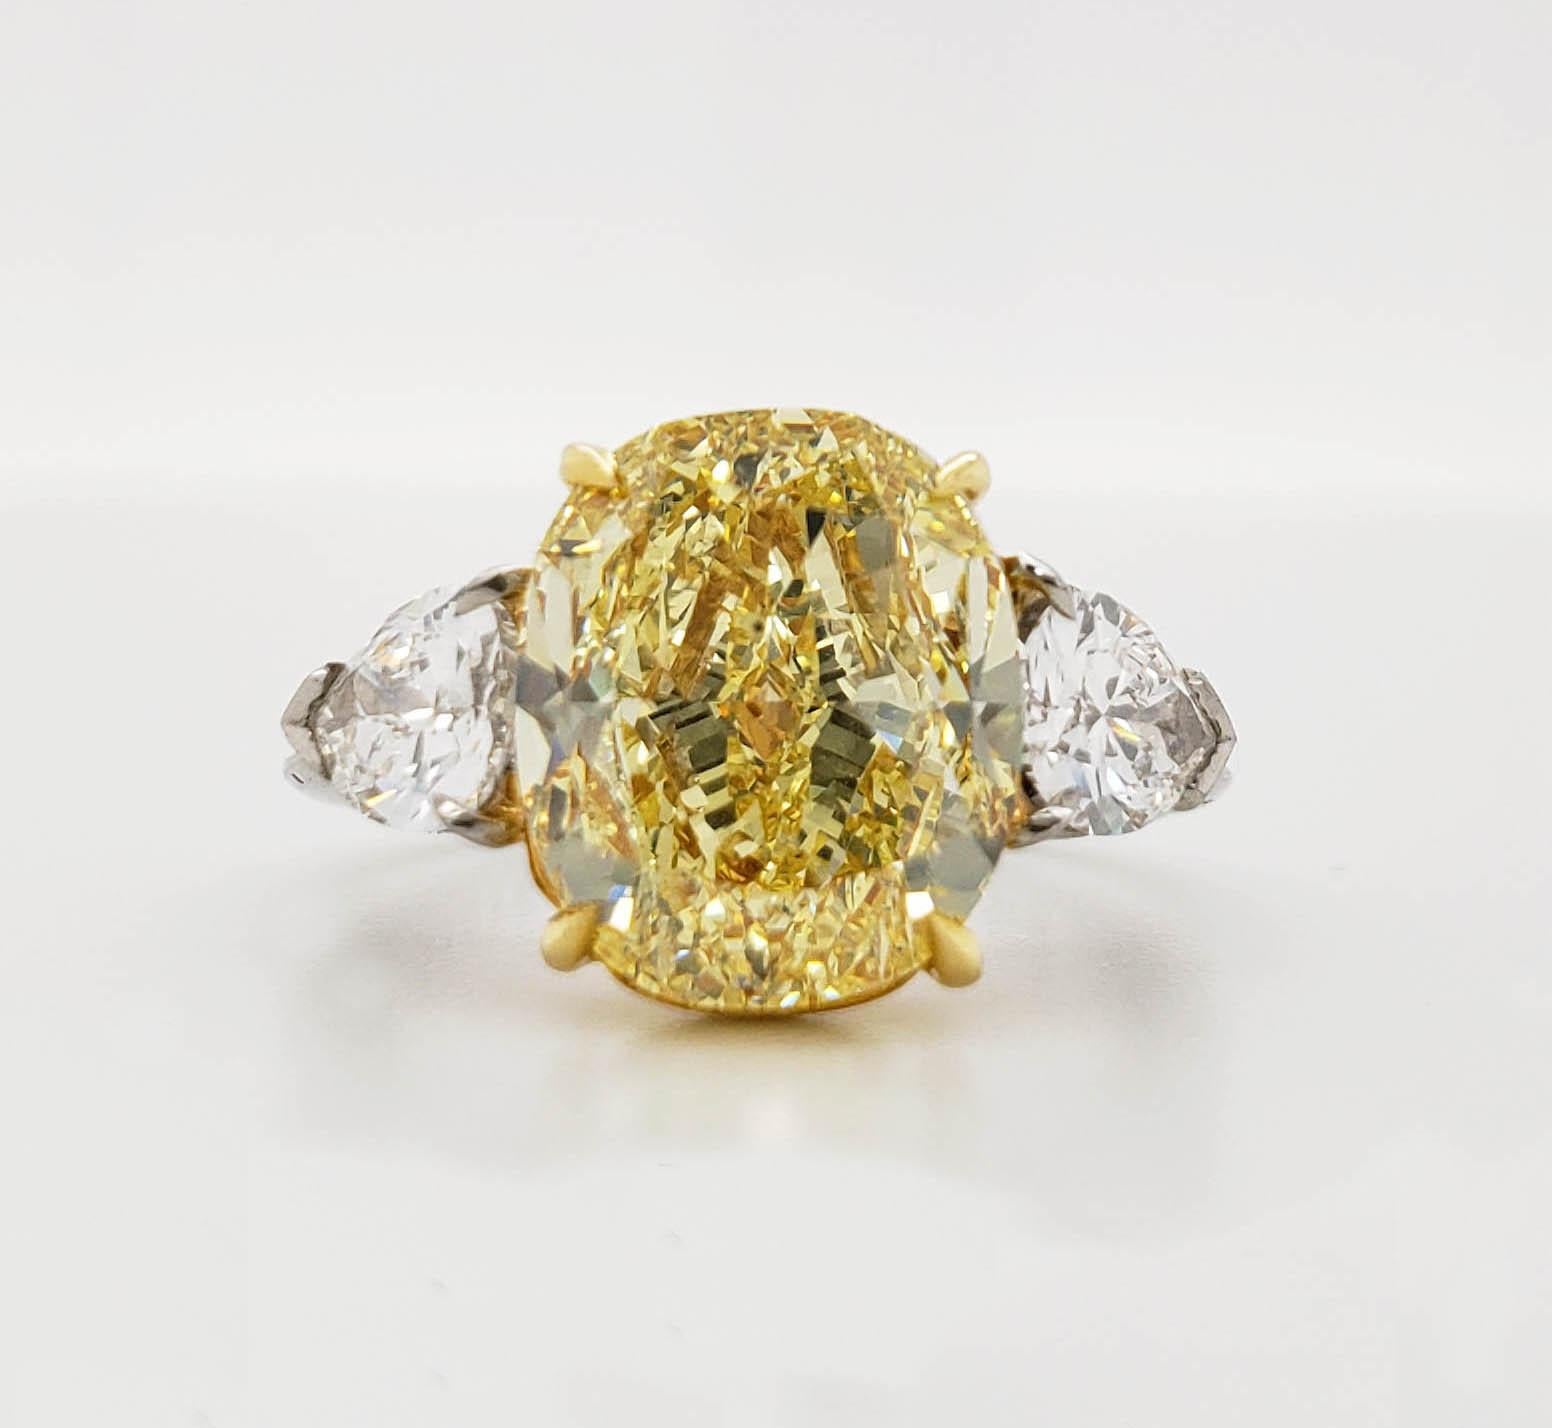 Scarselli 5.68 Carat Fancy Intense Yellow Cushion Cut Diamond Ring in Platinum 3